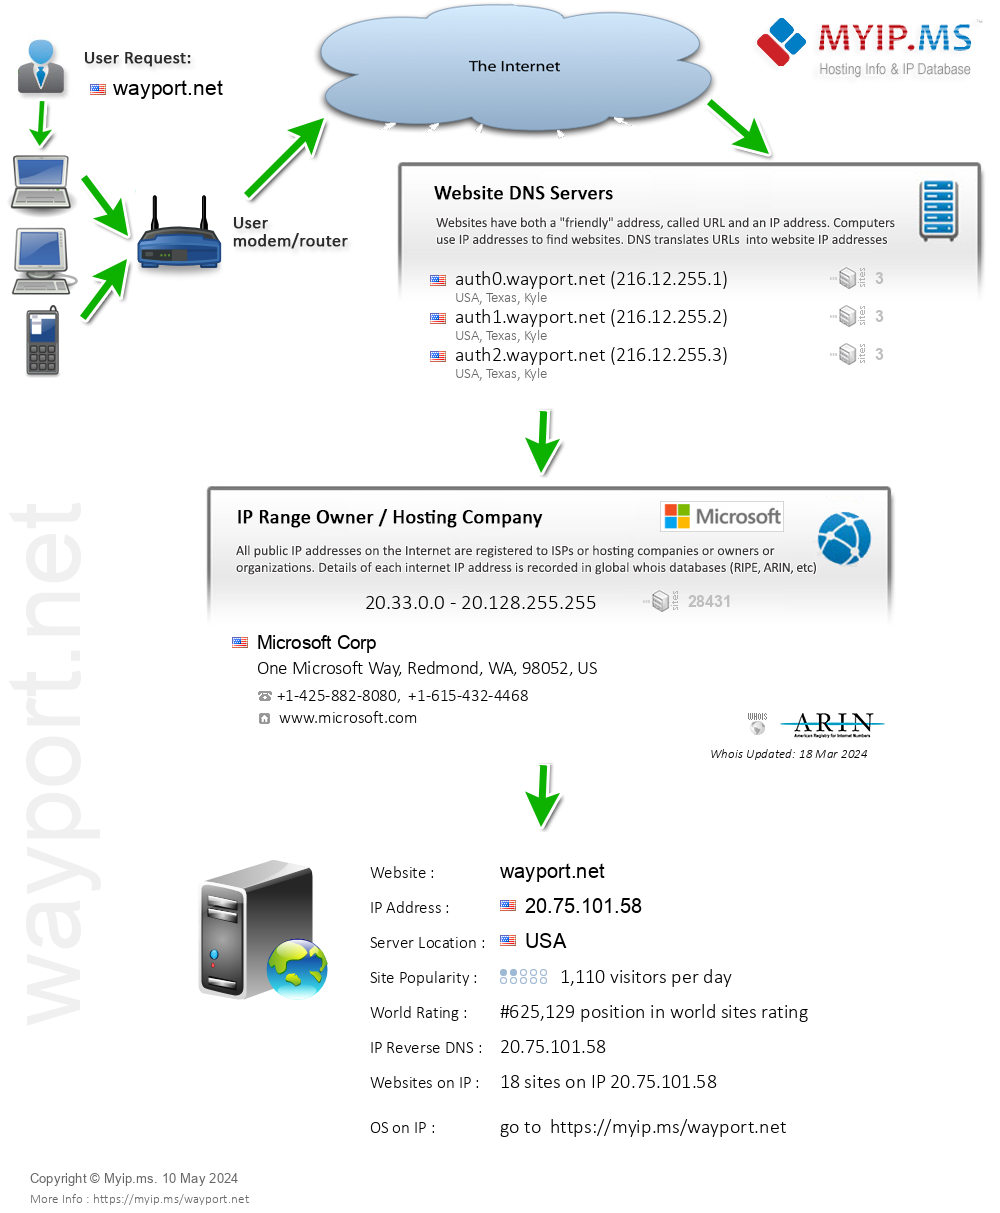 Wayport.net - Website Hosting Visual IP Diagram